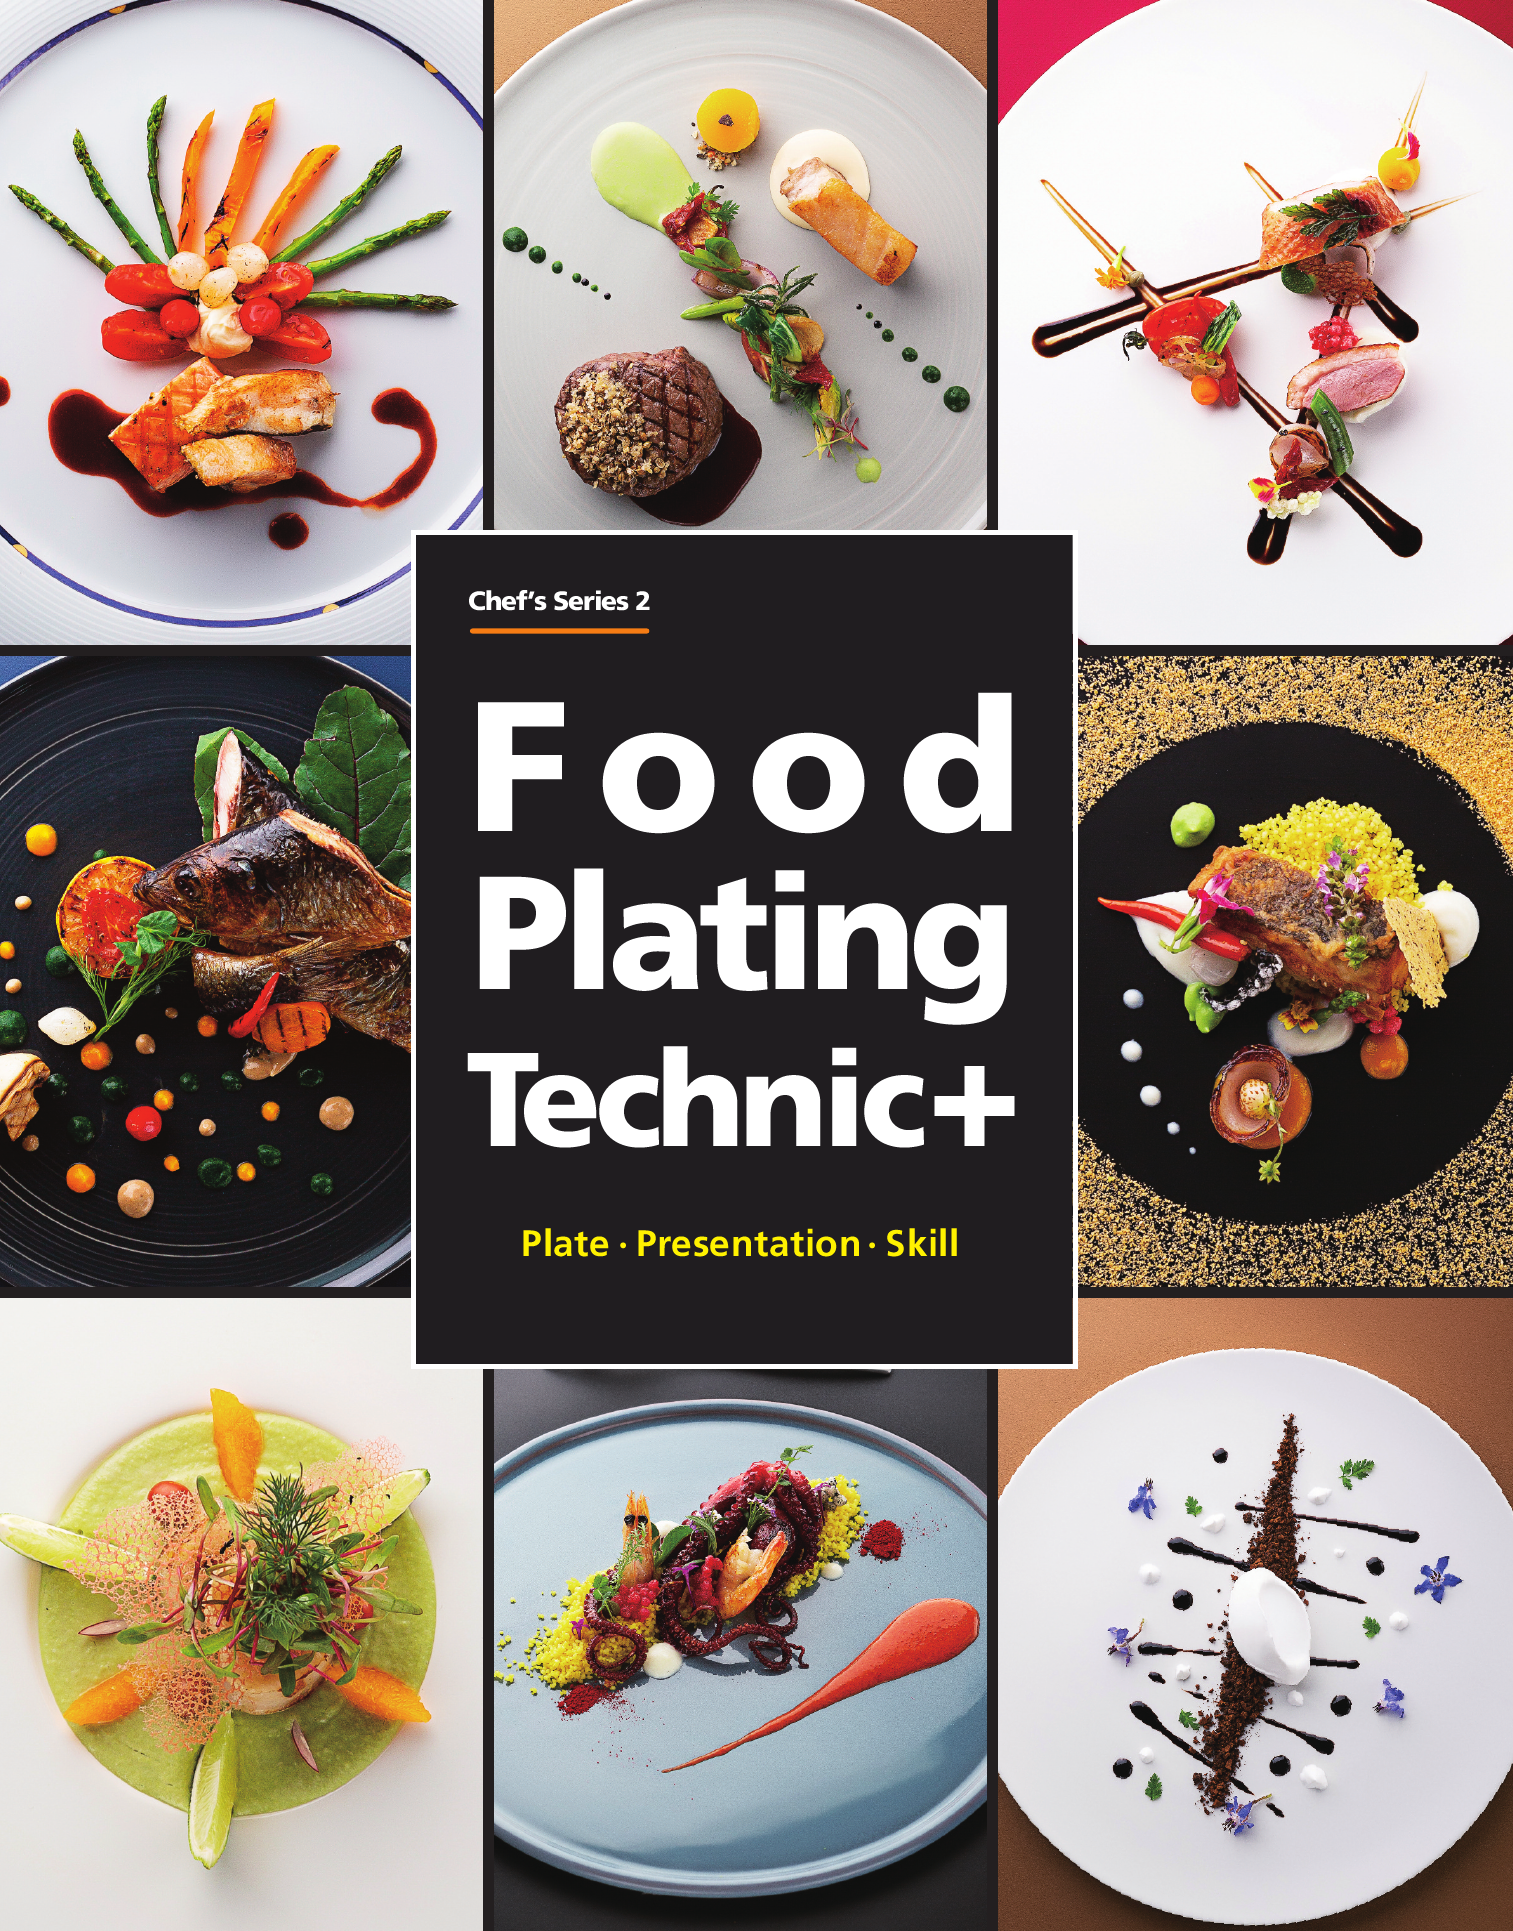 Food Plating Technic+